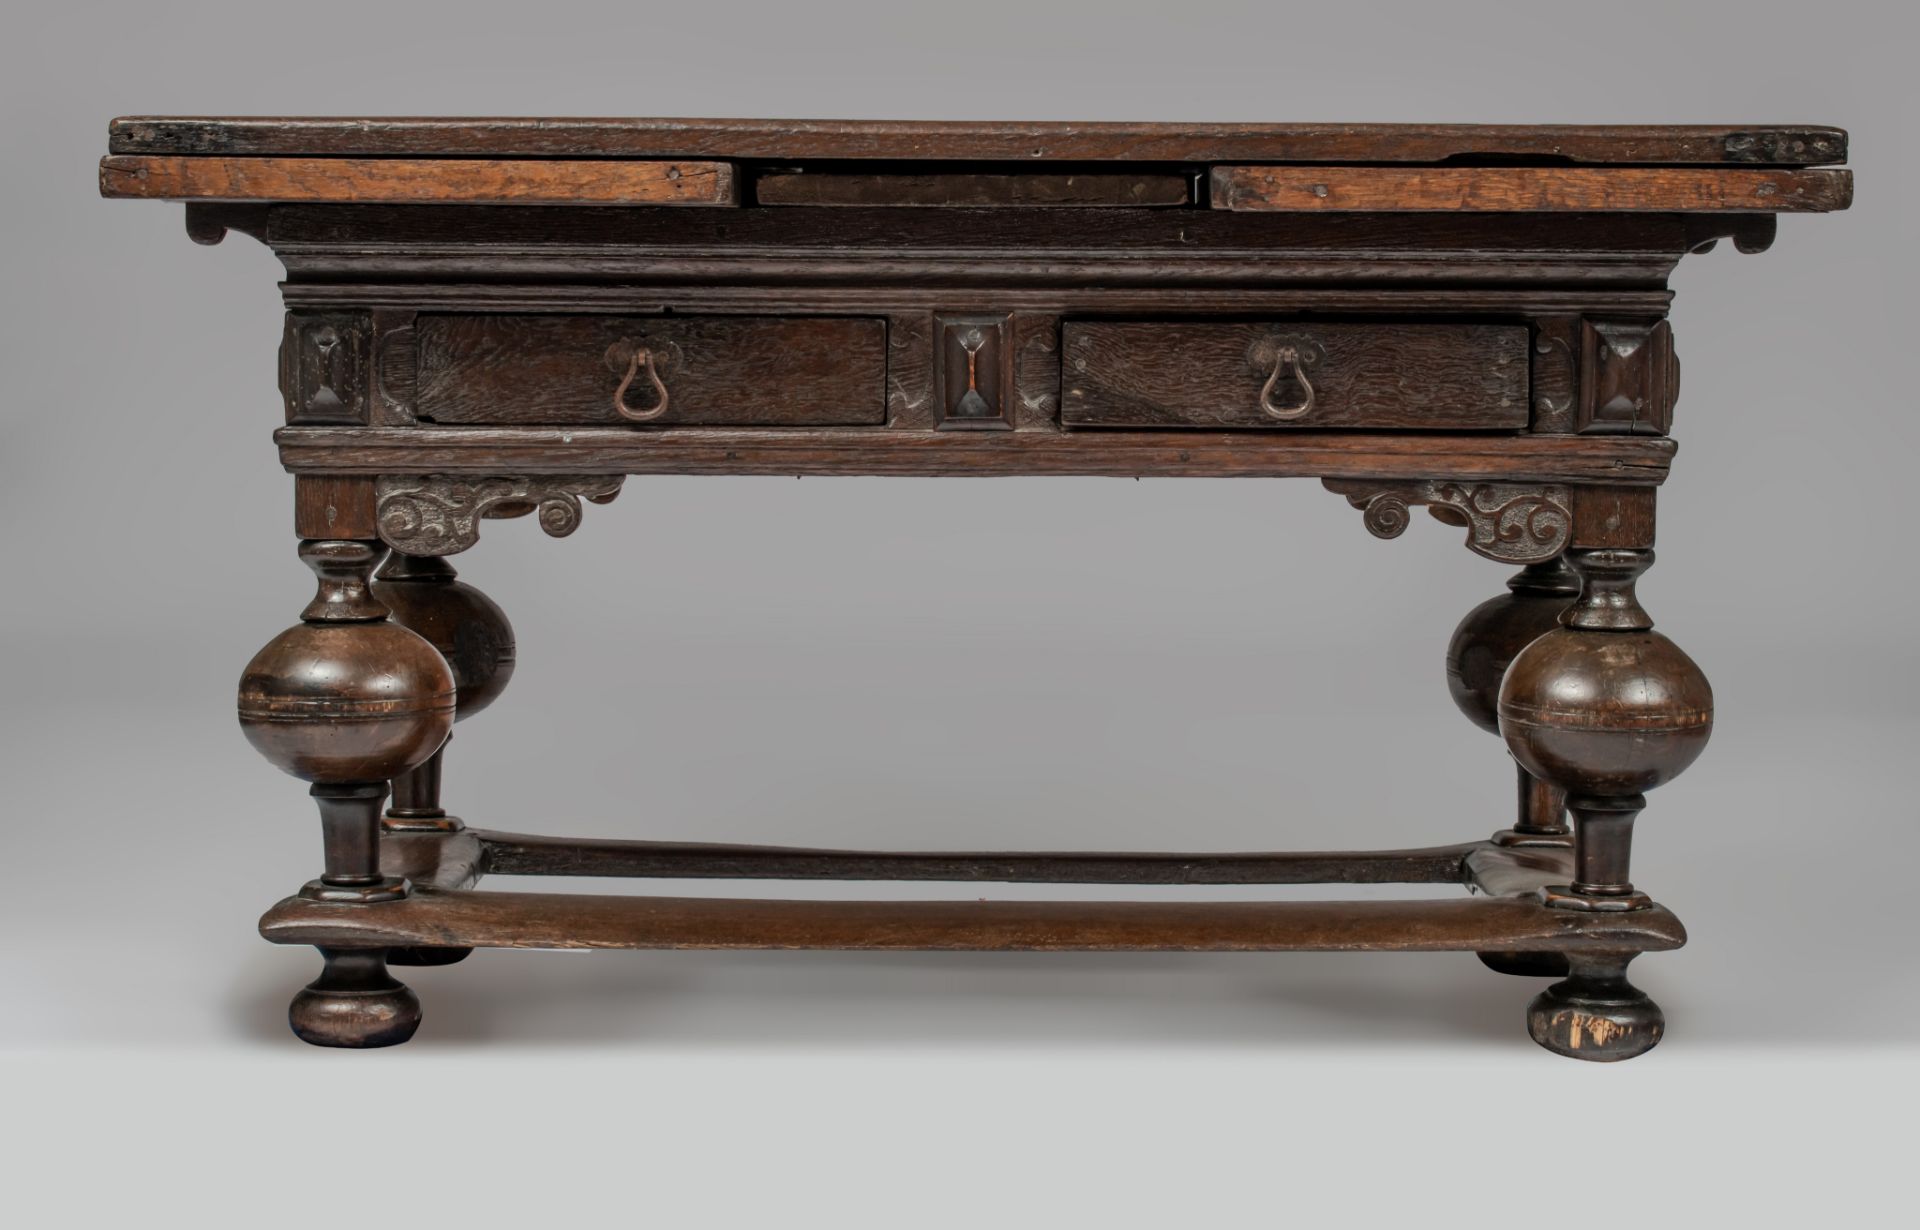 An impressive Flemish or Dutch oak table, early 17thC, H 80 - W 146 - 252 - D 85 cm - Image 4 of 8